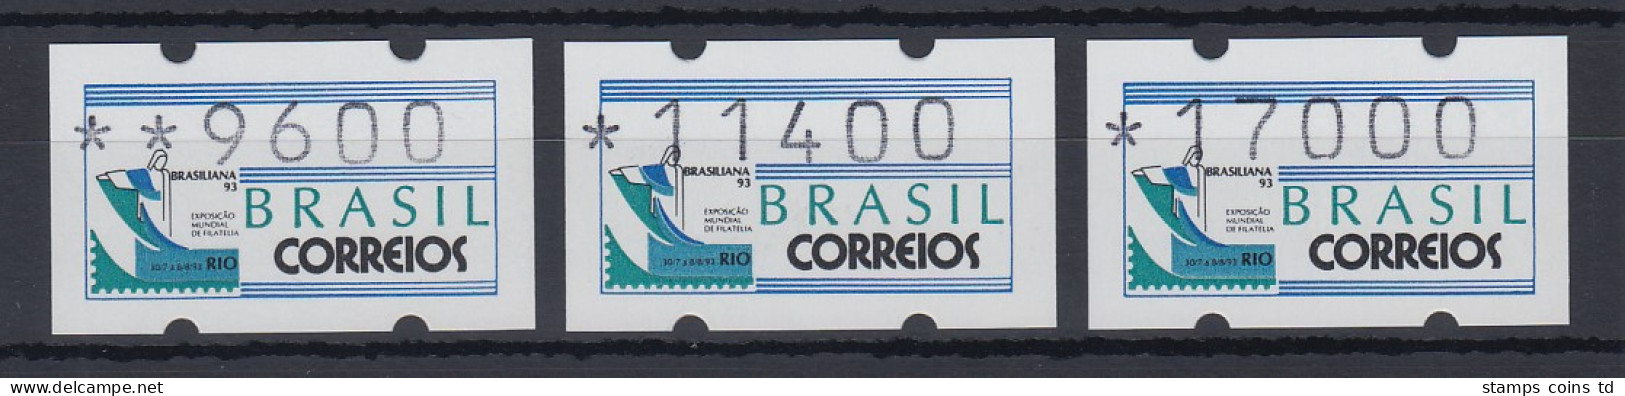 Brasilien 1993 Sonder-ATM BRASILIANA'93, Mi.-Nr. 5, Satz 9600-11400-17000 ** - Viñetas De Franqueo (Frama)